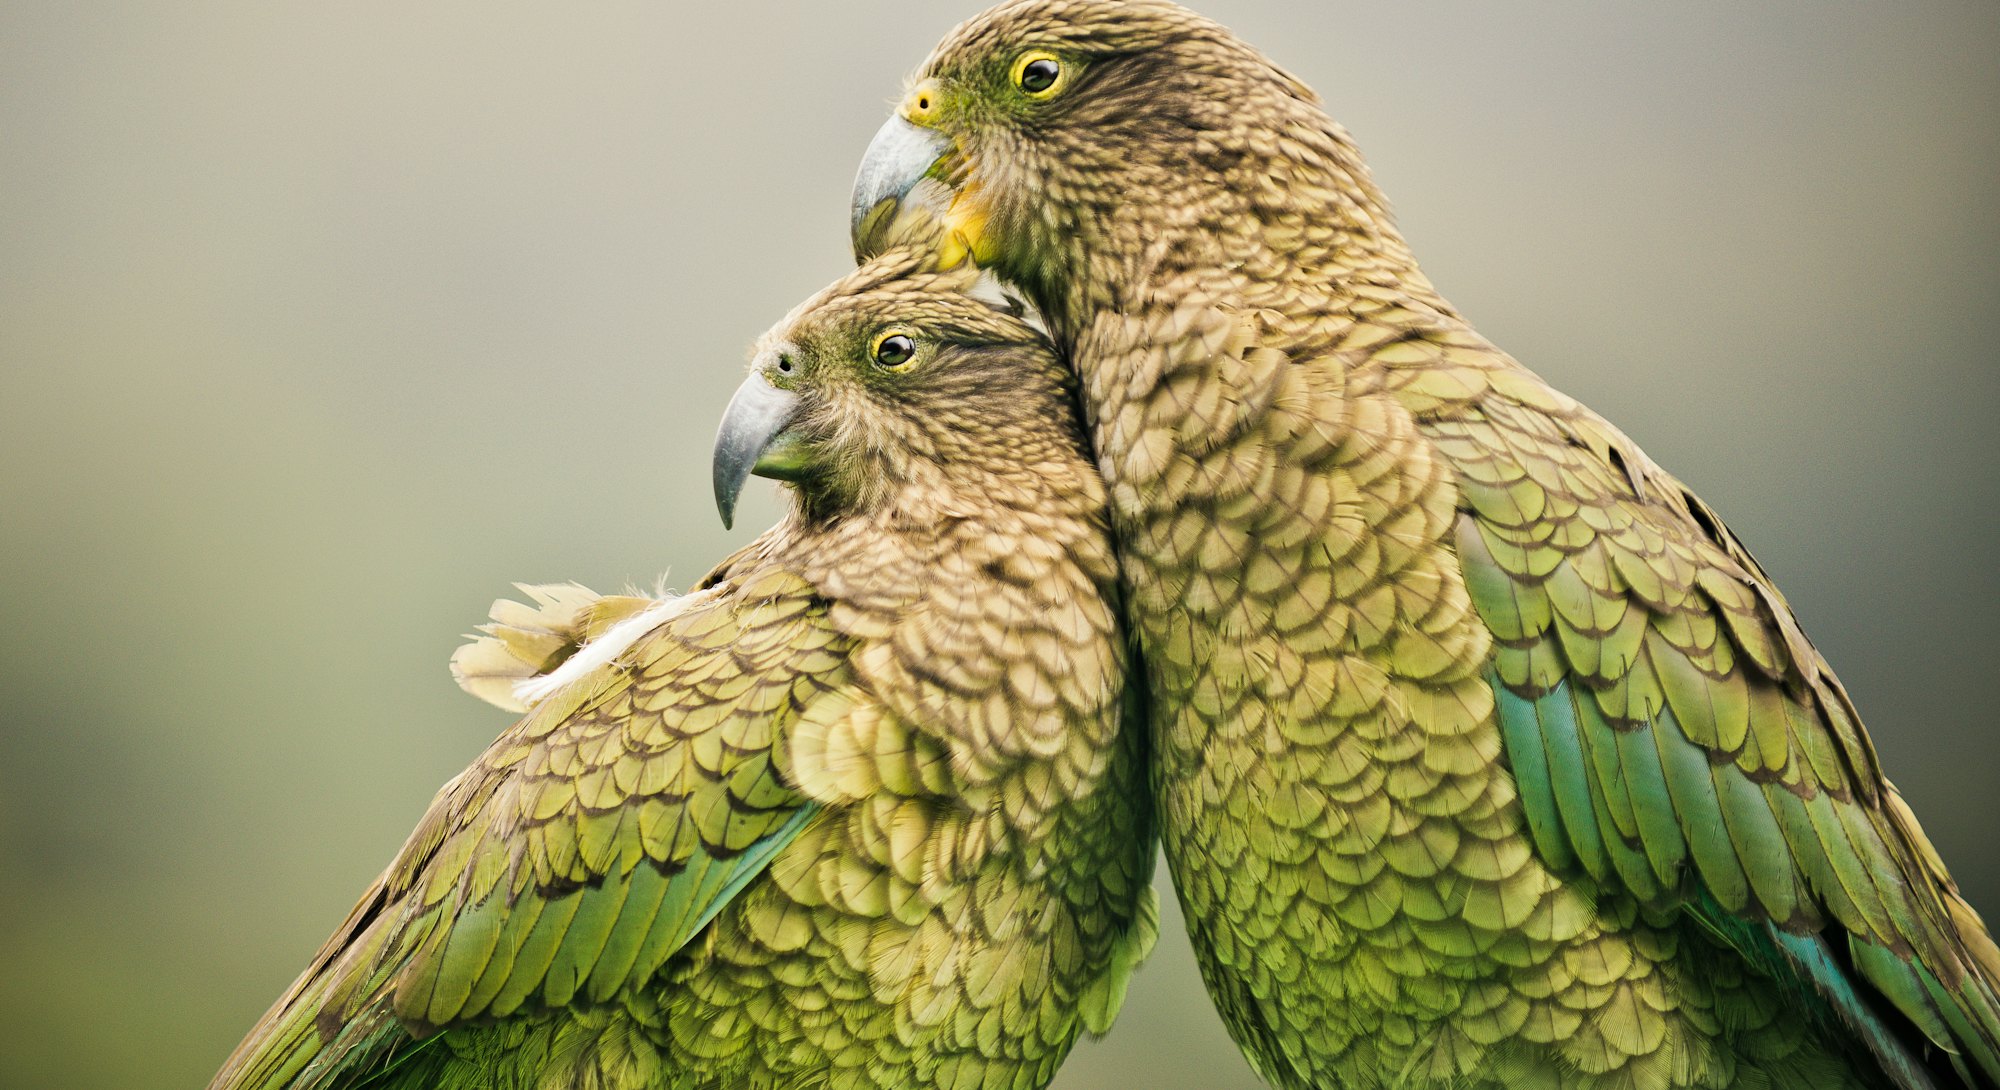 Kea's (Alpine Parrots) sitting together, Arthurs Pass National Park, New Zealand (